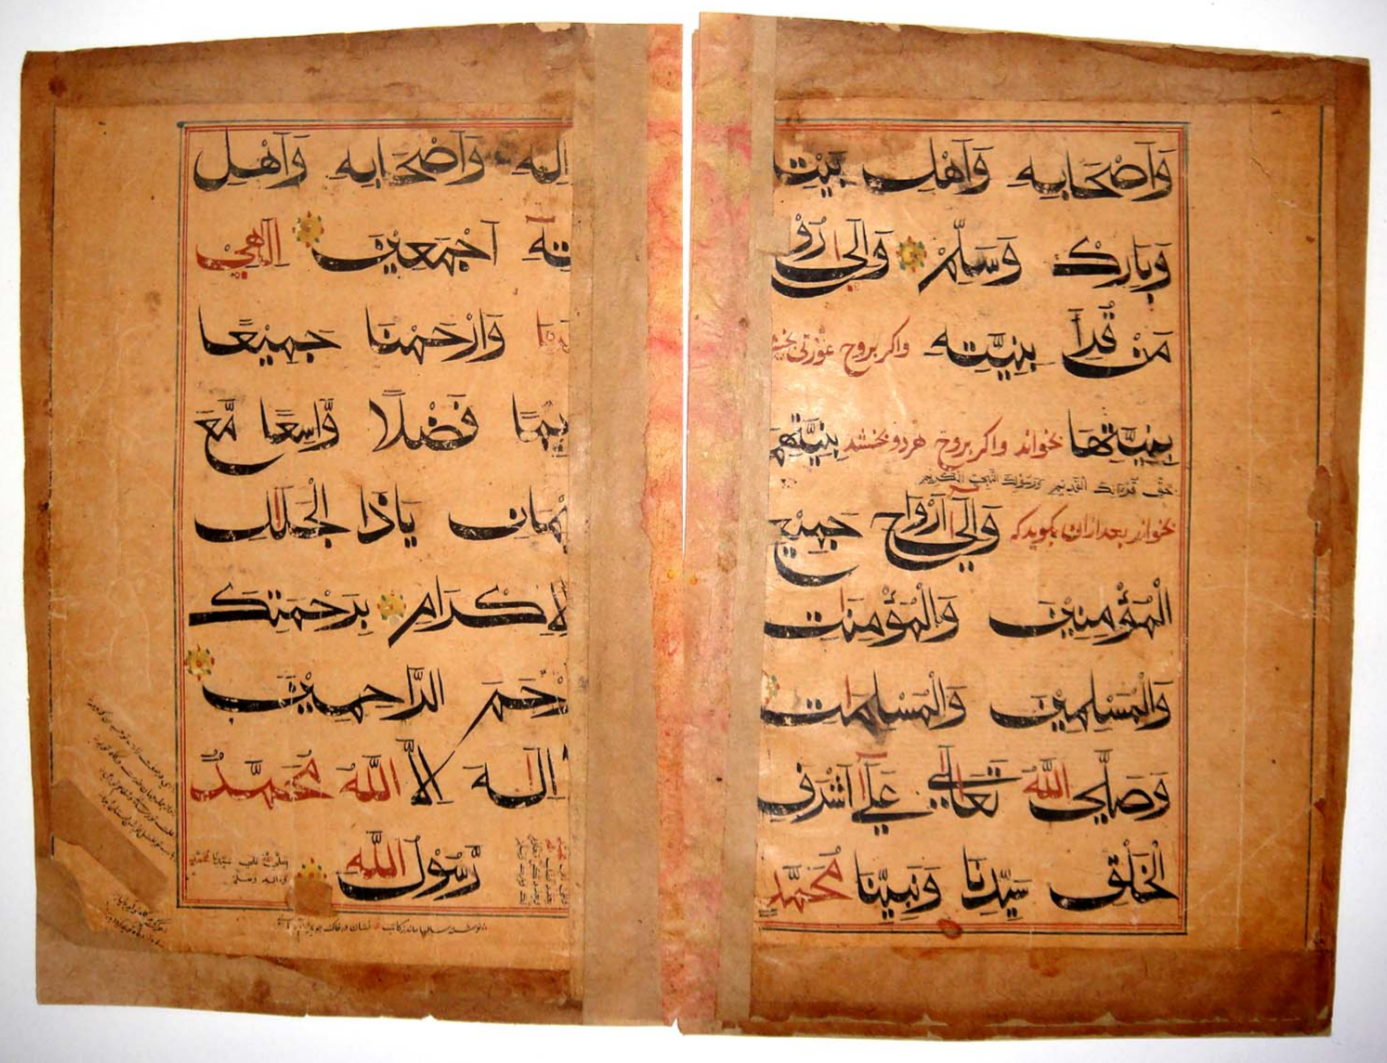 <a href="https://www.pshterate.com/"><img src="Asbabun Nuzul Al Quran Kitab Manuscript PSHT.png" alt="Asbabun Nuzul Al Quran"></a>